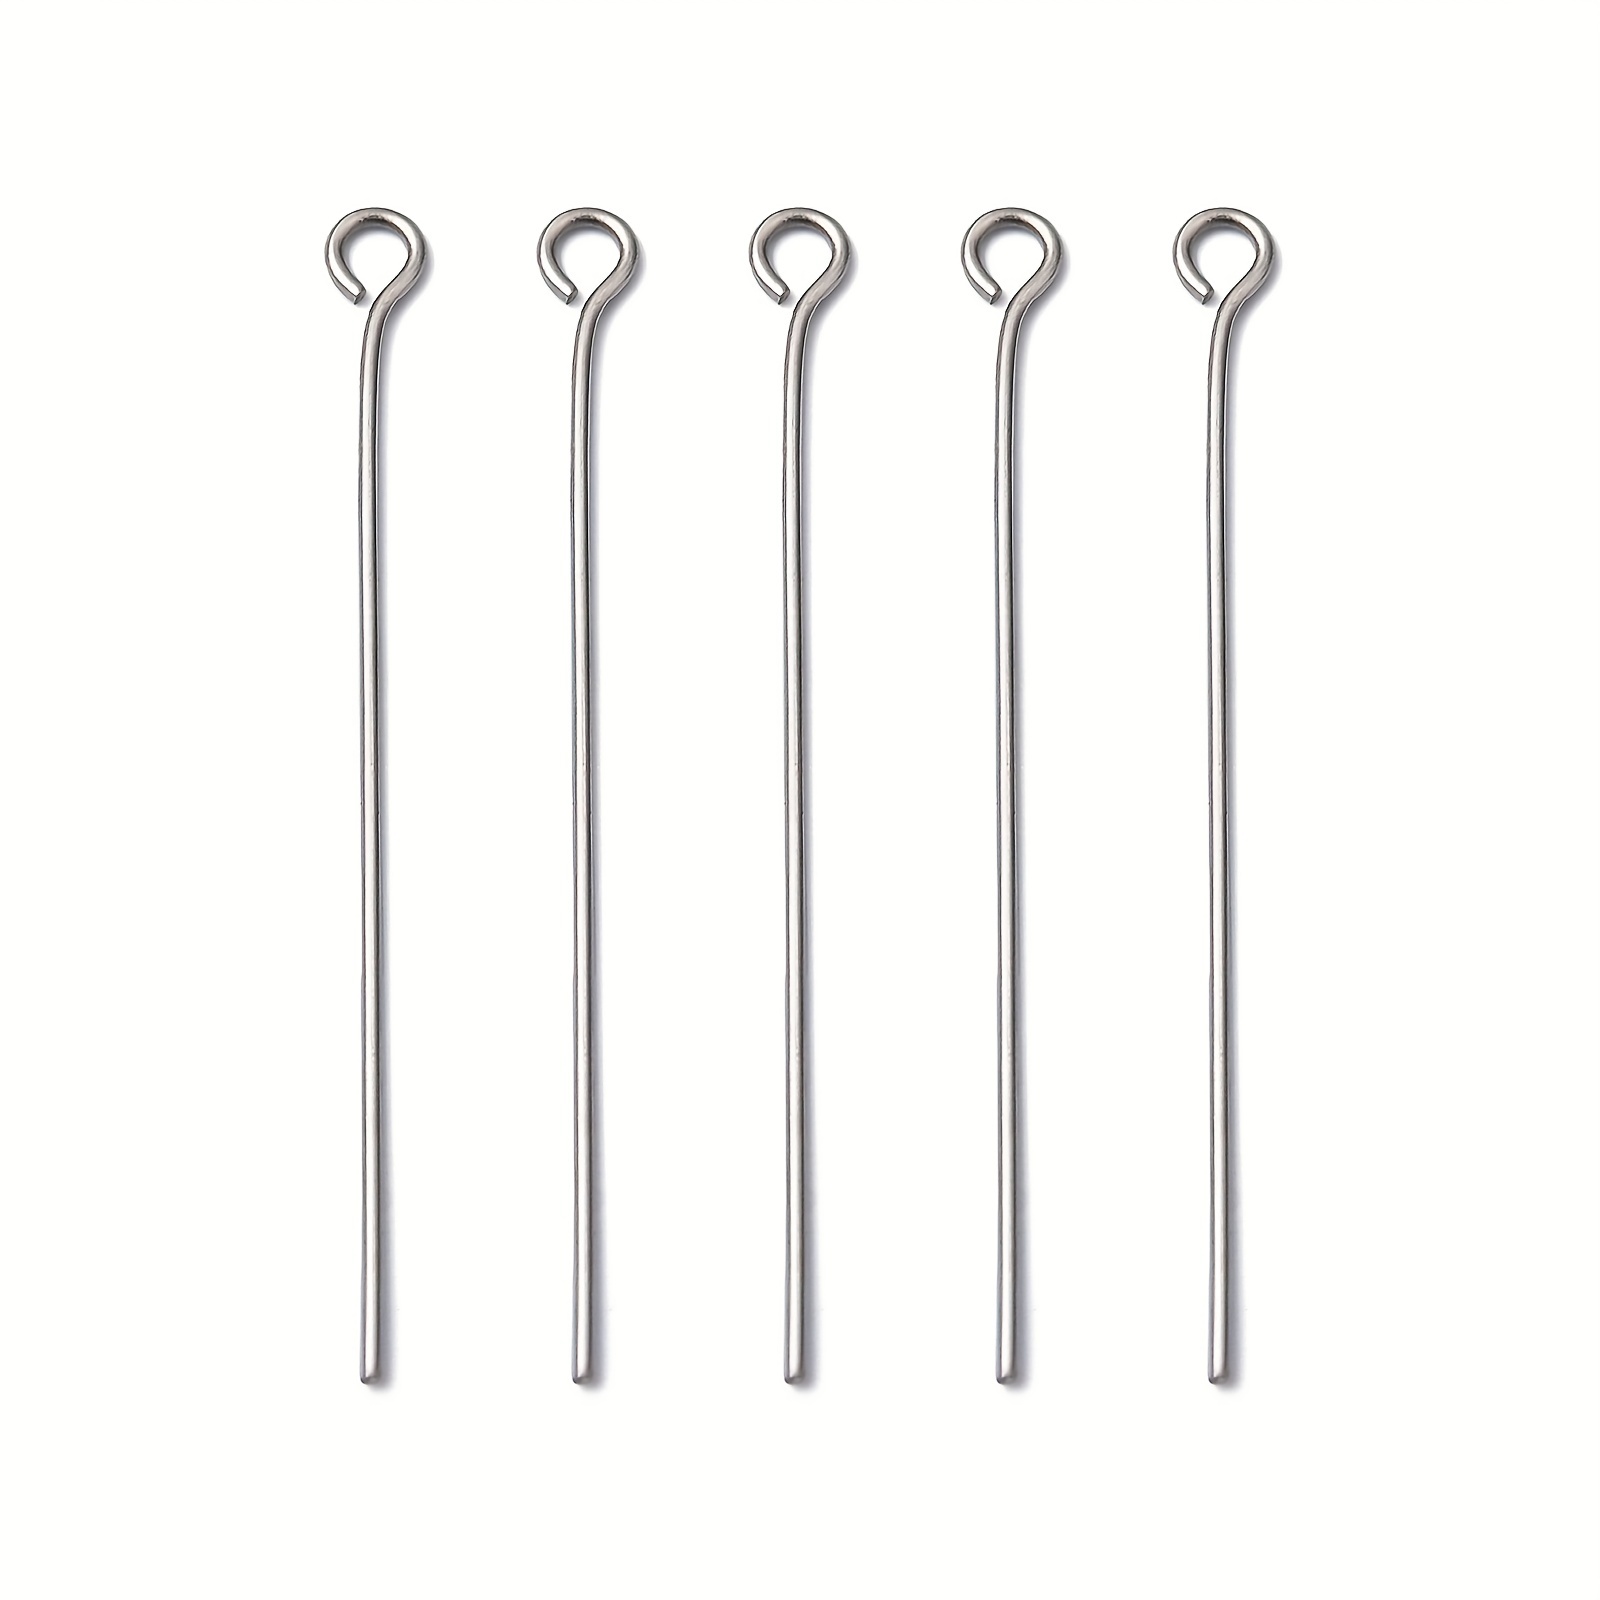 100pcs 304 stainless steel nine needle 9 shape head pins eye pins for diy bracelet necklace earring pendant jewelry making